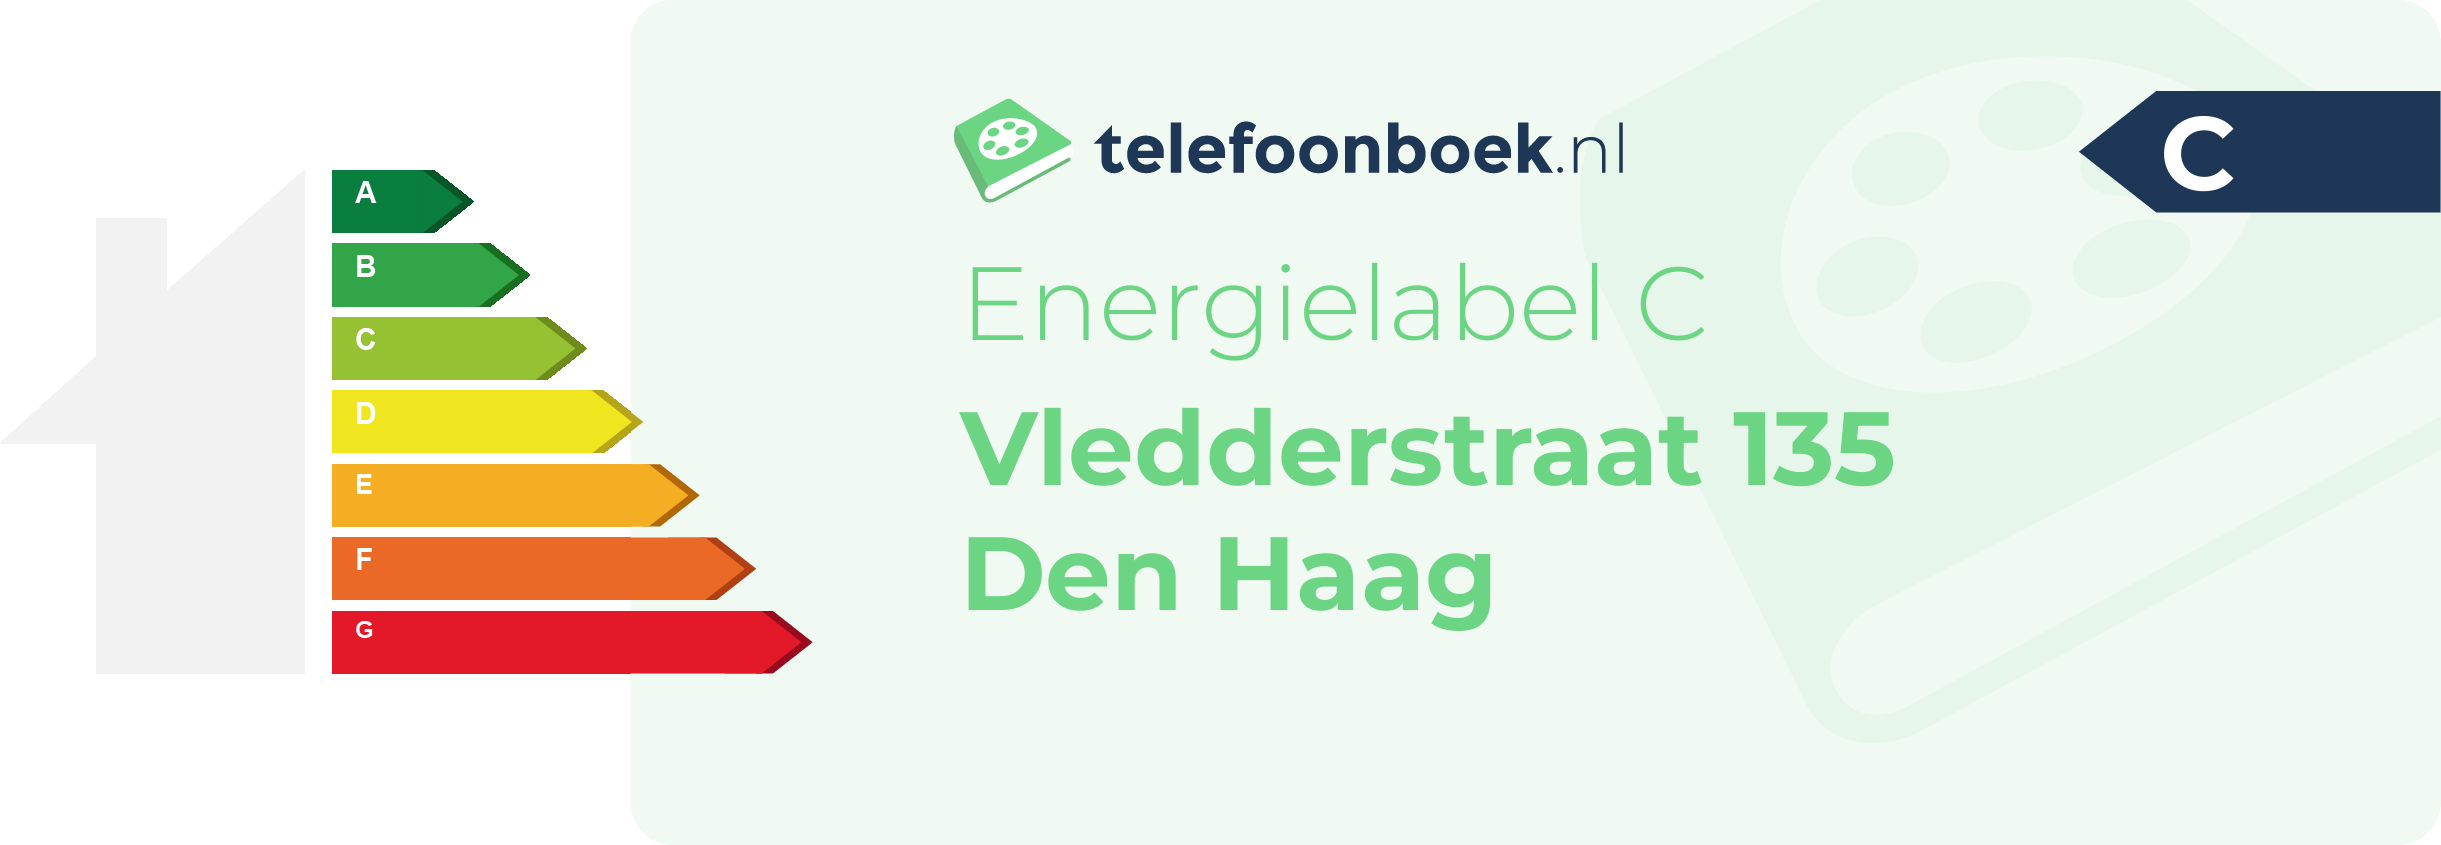 Energielabel Vledderstraat 135 Den Haag